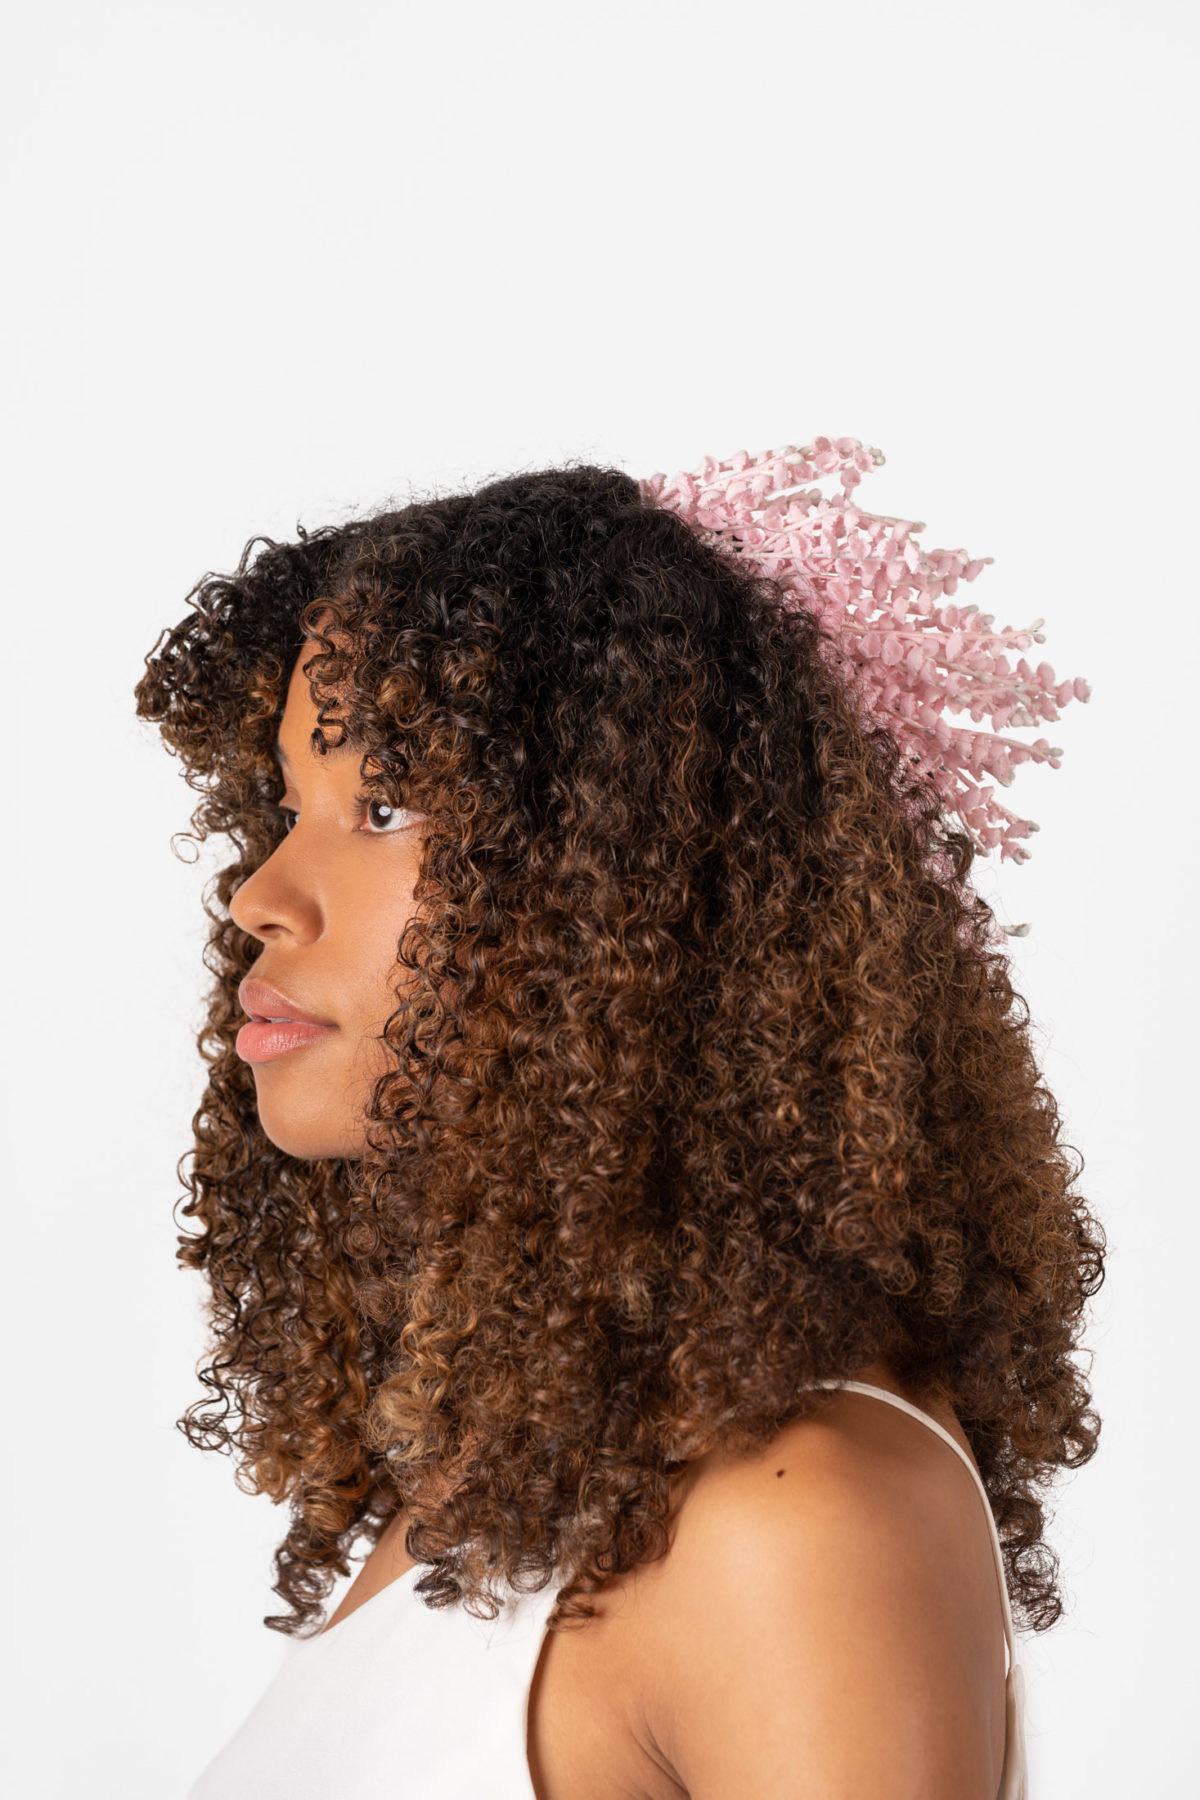 Fashion shot of a model wearing a Mariee Lace Veils headpiece